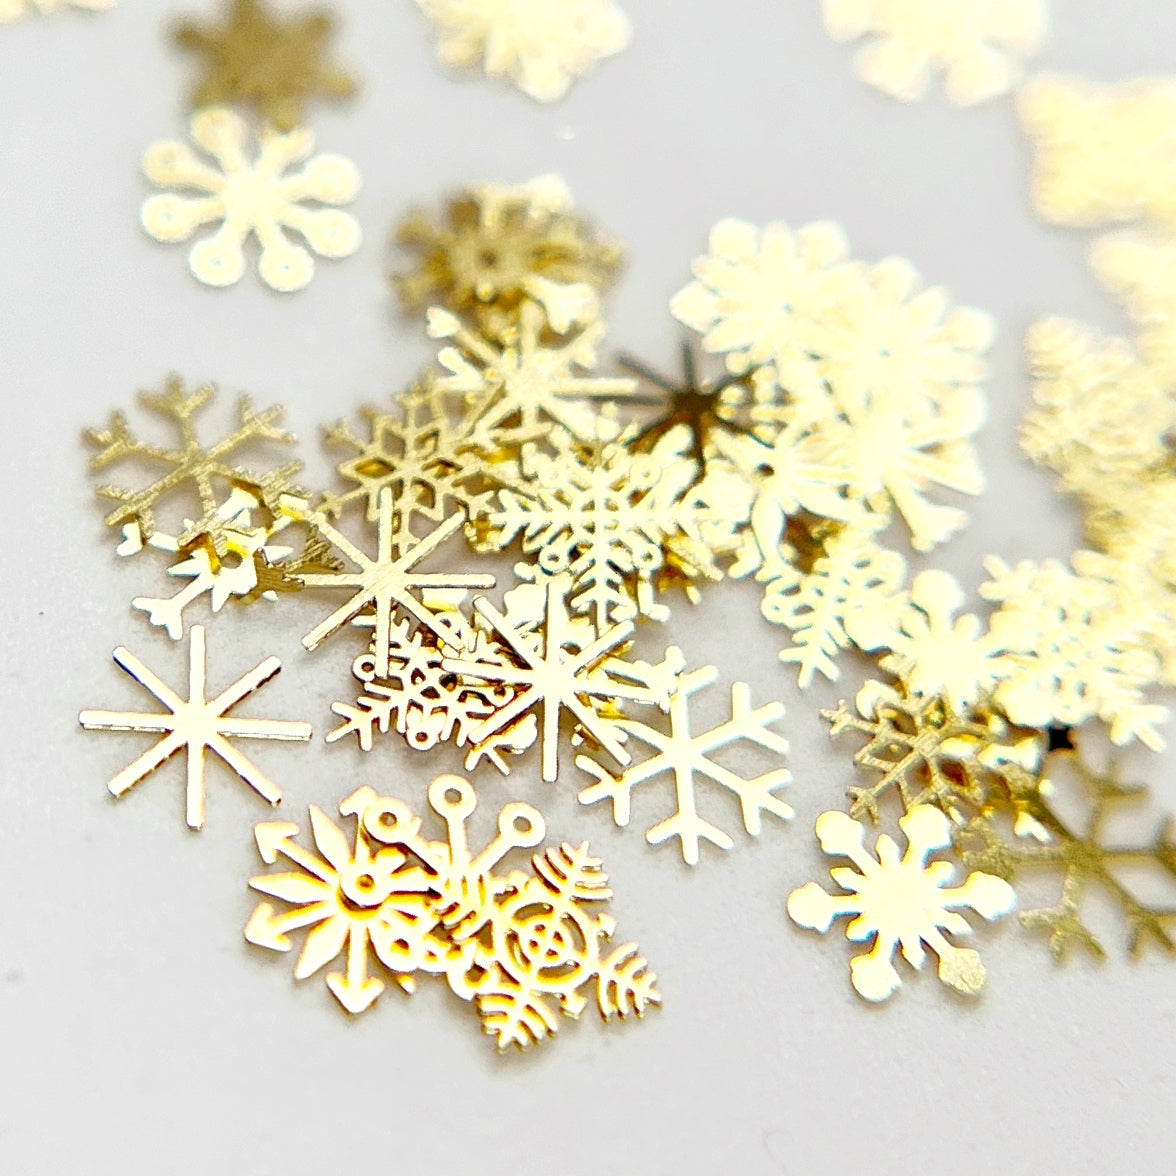 Snowflake Slice - Thin Gold Metal Snowflake Nail Charm, Presented on White Background.